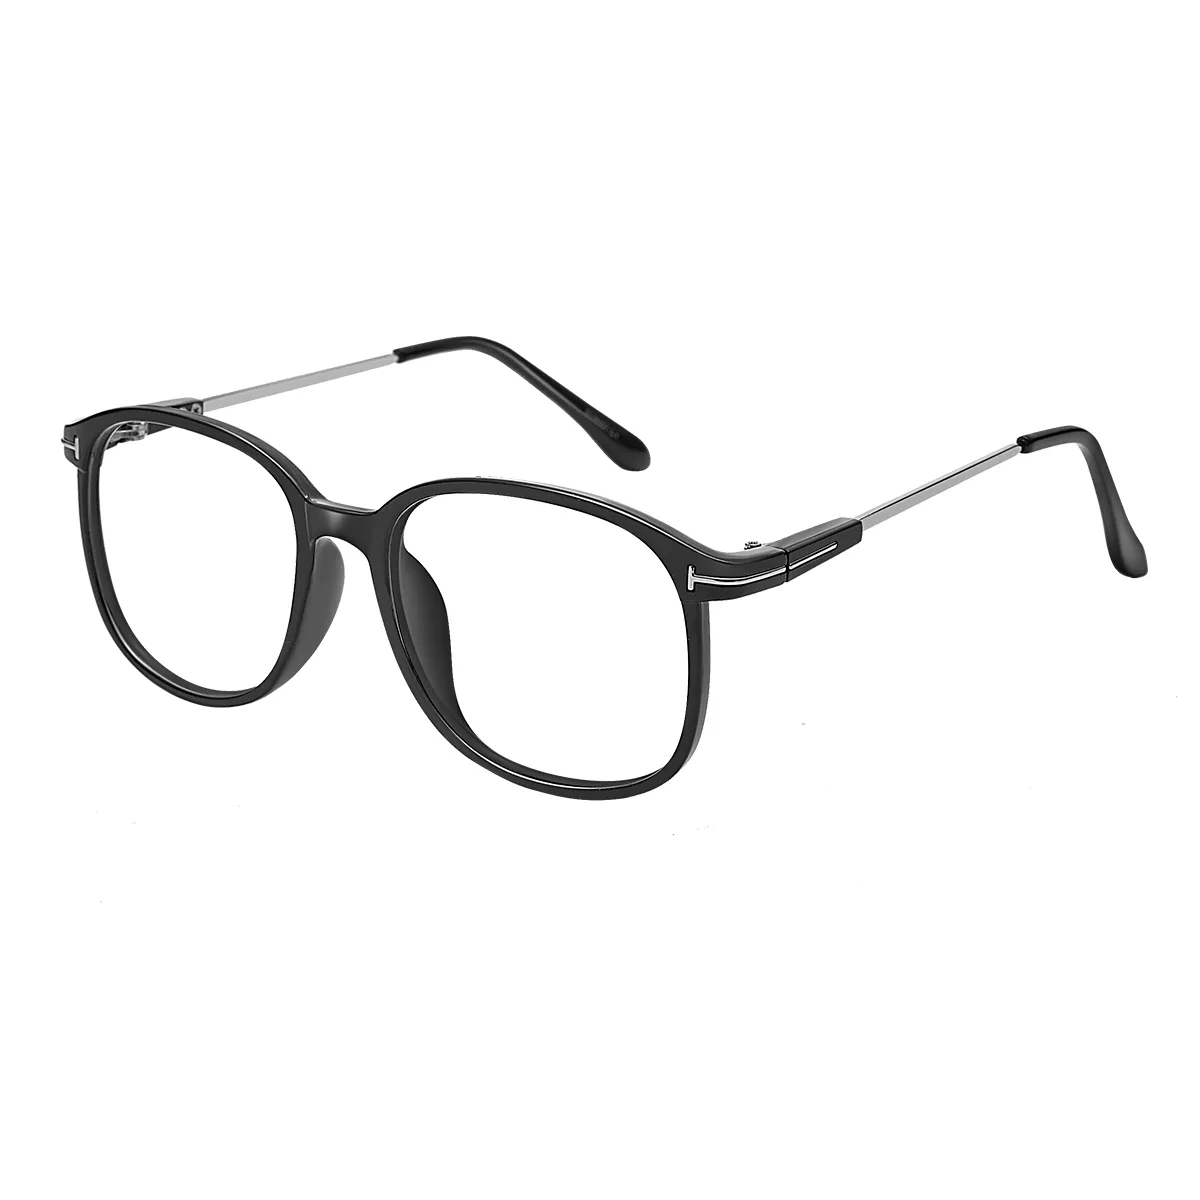 Thea - Oval Black Glasses for Women